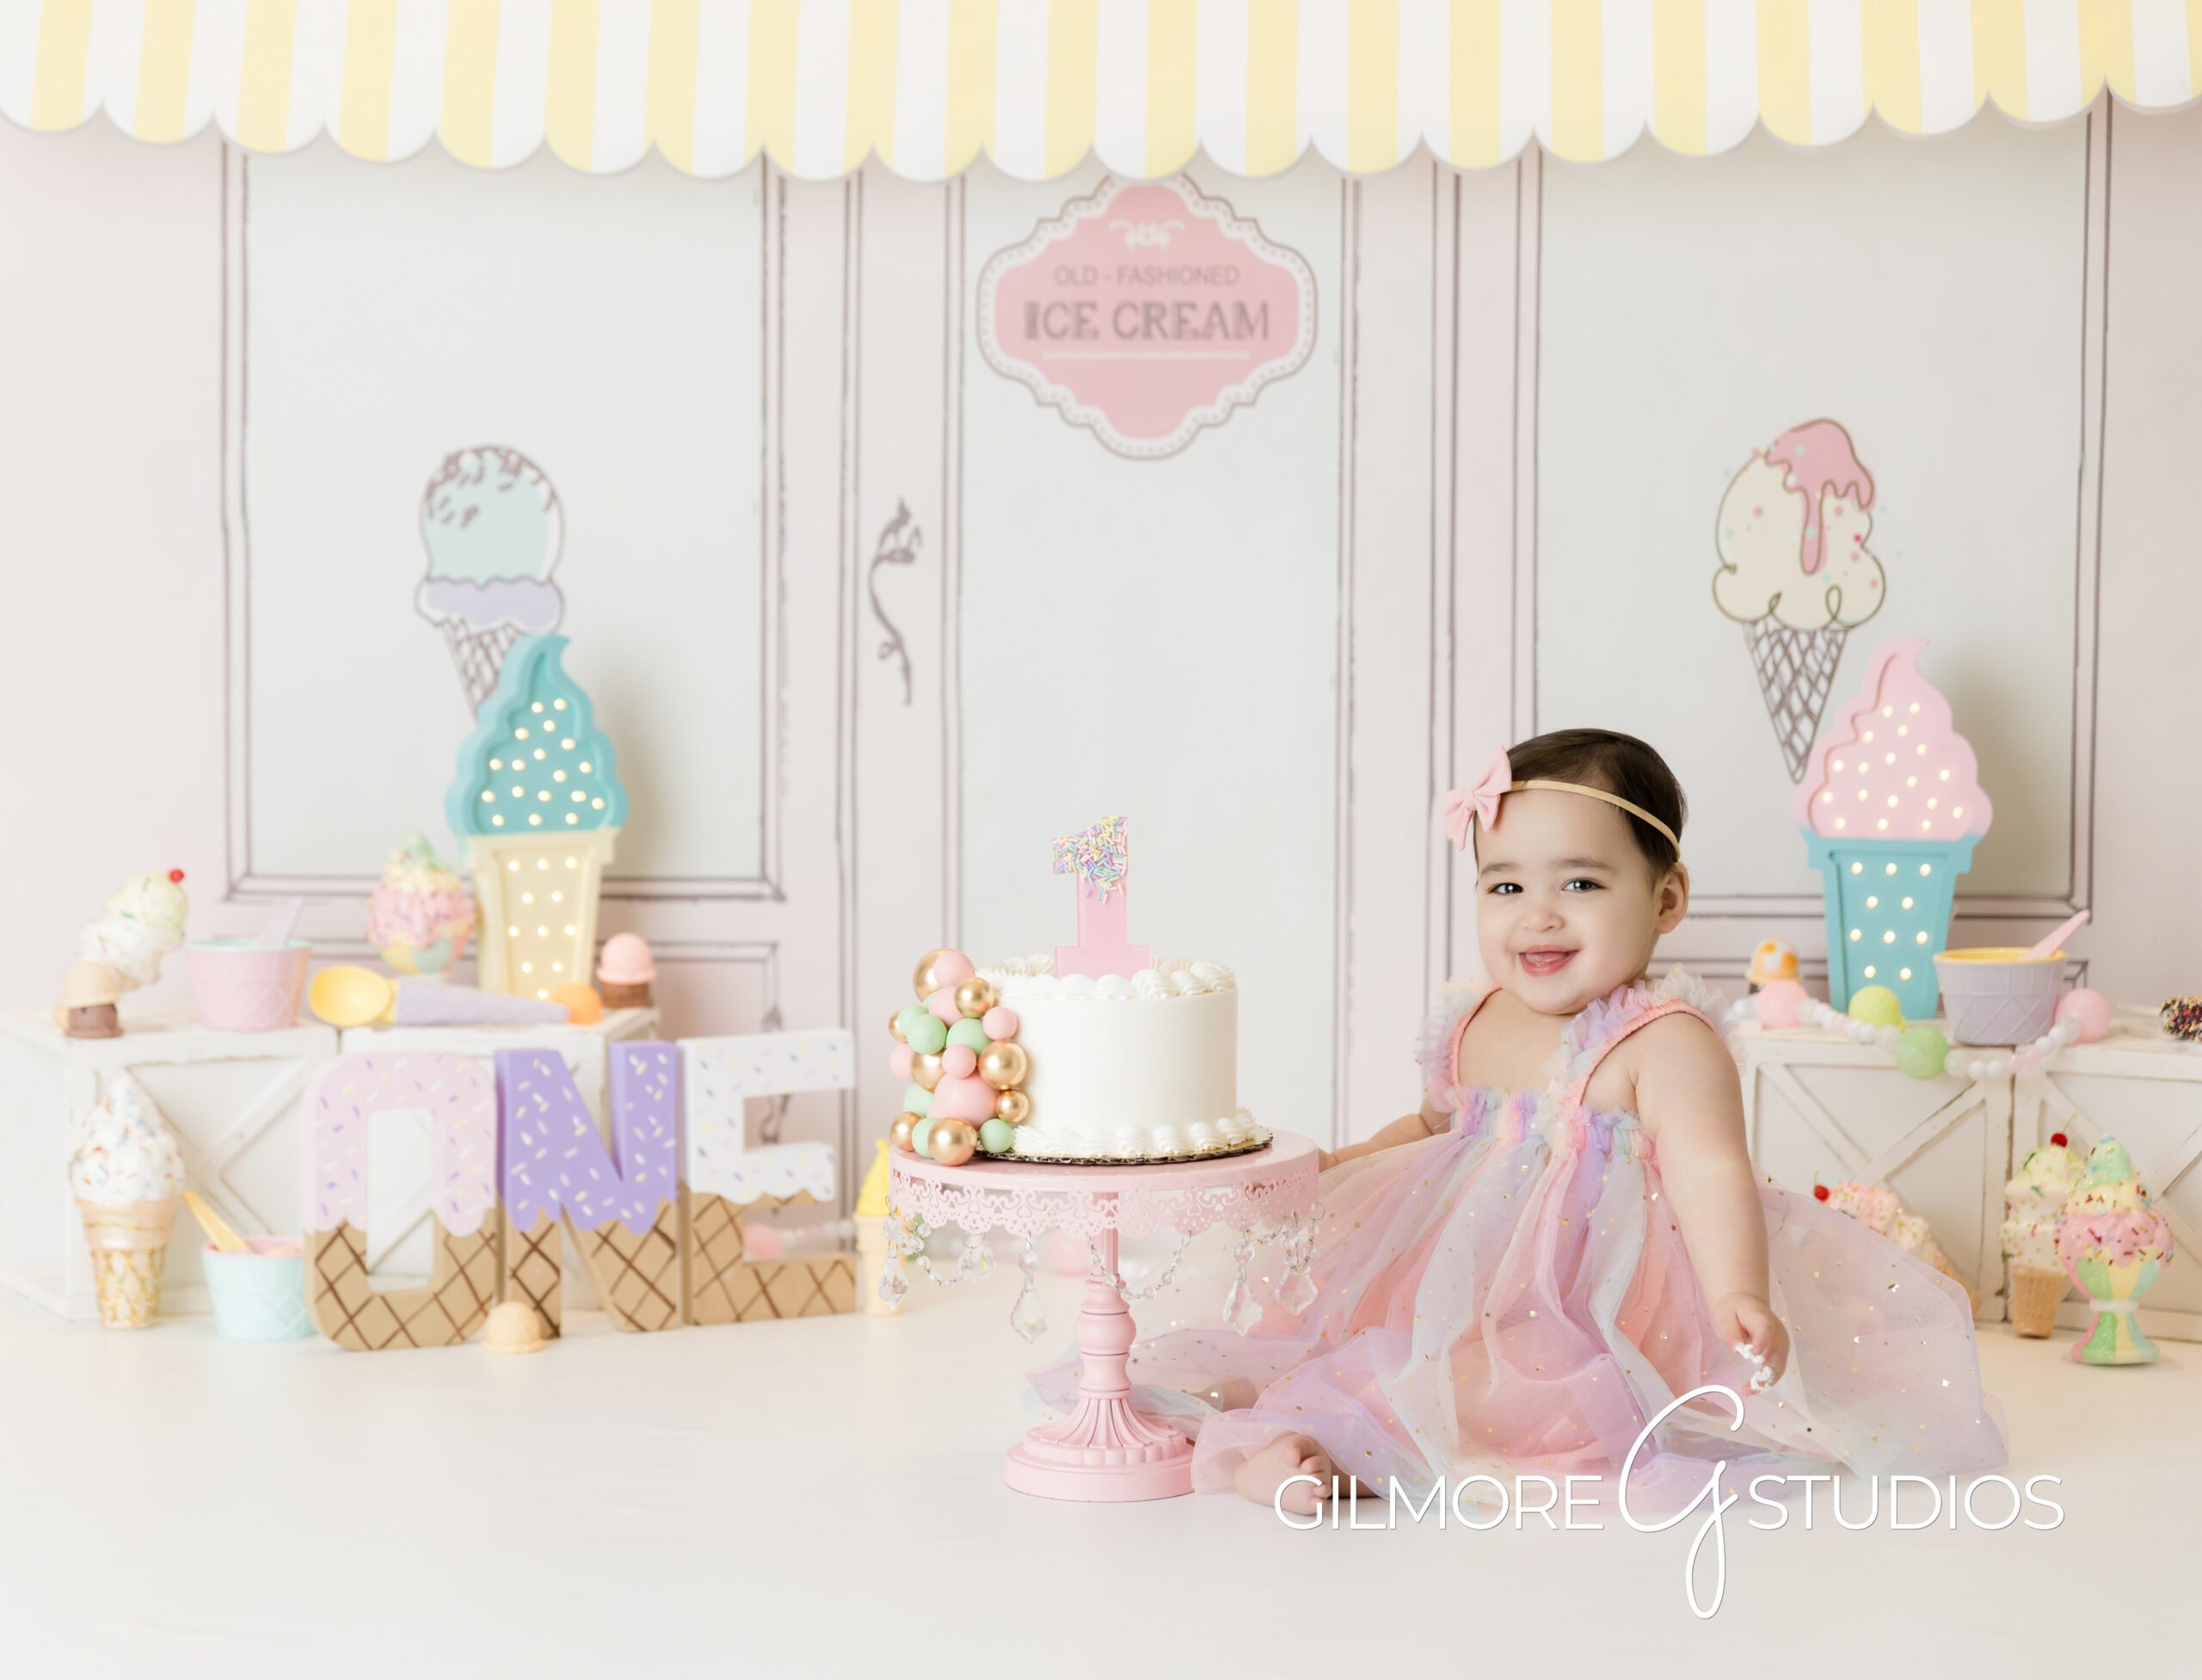 ice cream theme cake Smash, little girl, pink bow, pink dress, white cake, ice cream parlor, photography, Gilmore studios